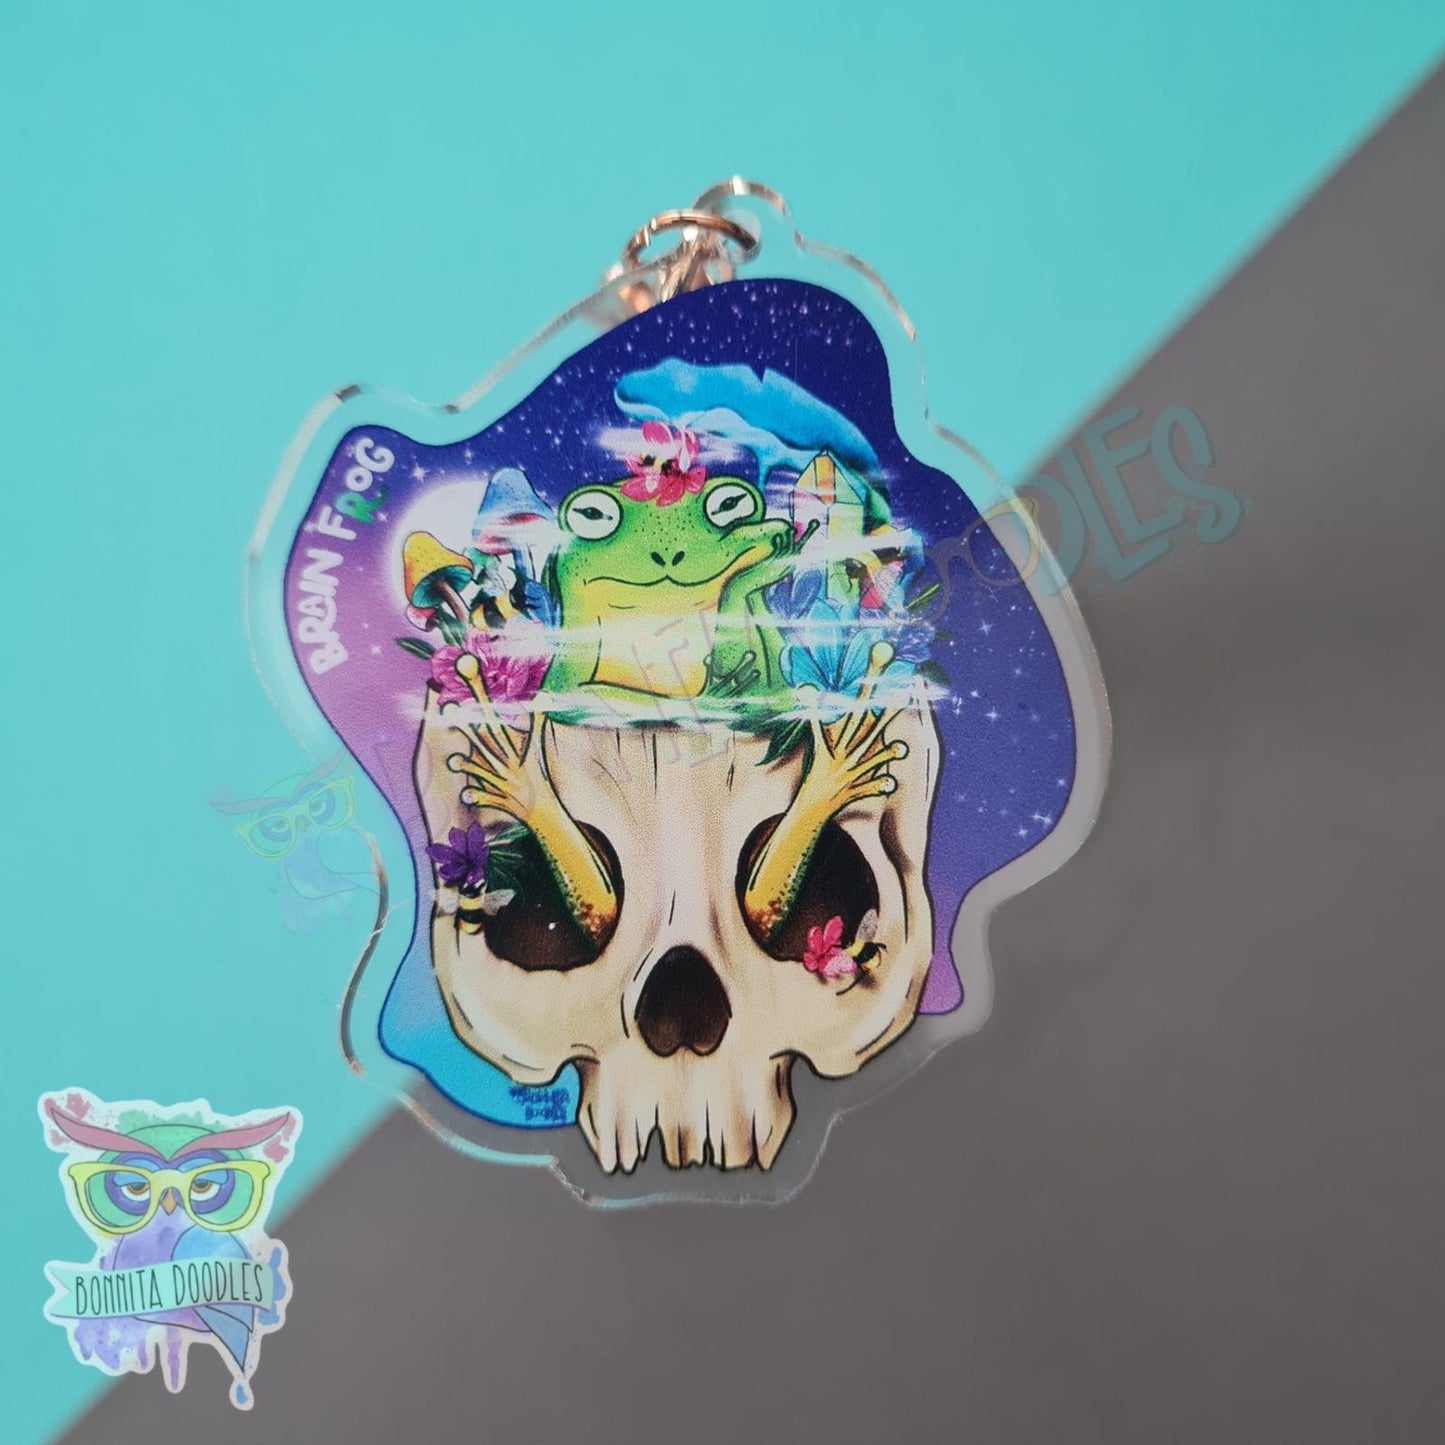 Brain frog keychain / charm. Spoonie, neurospicy